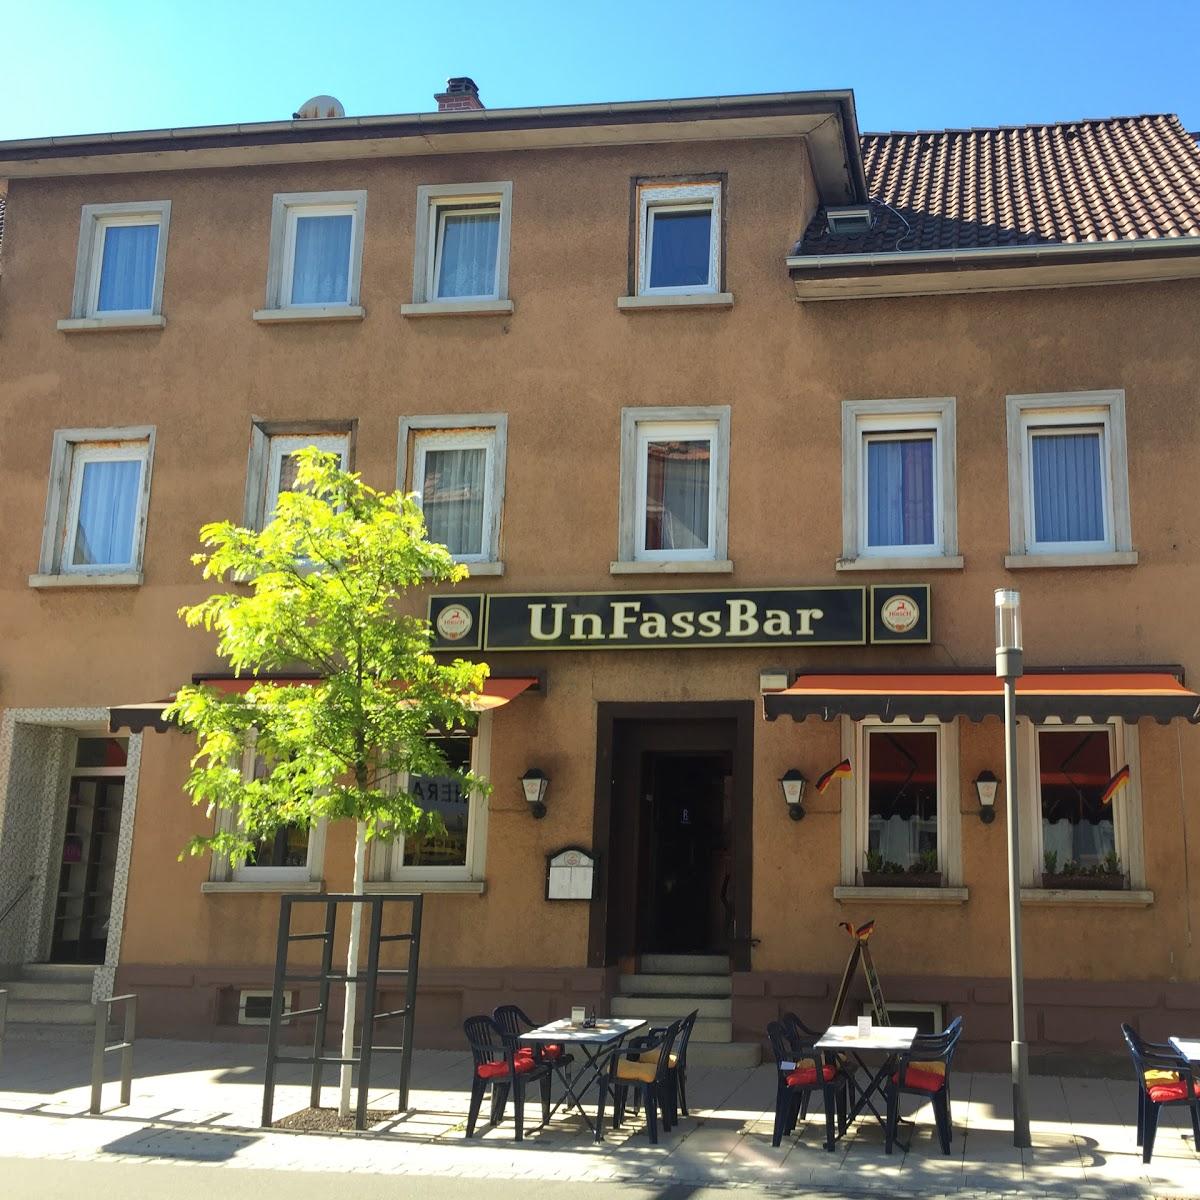 Restaurant "cafe, bar & lounge | Zapfhahn" in Tuttlingen